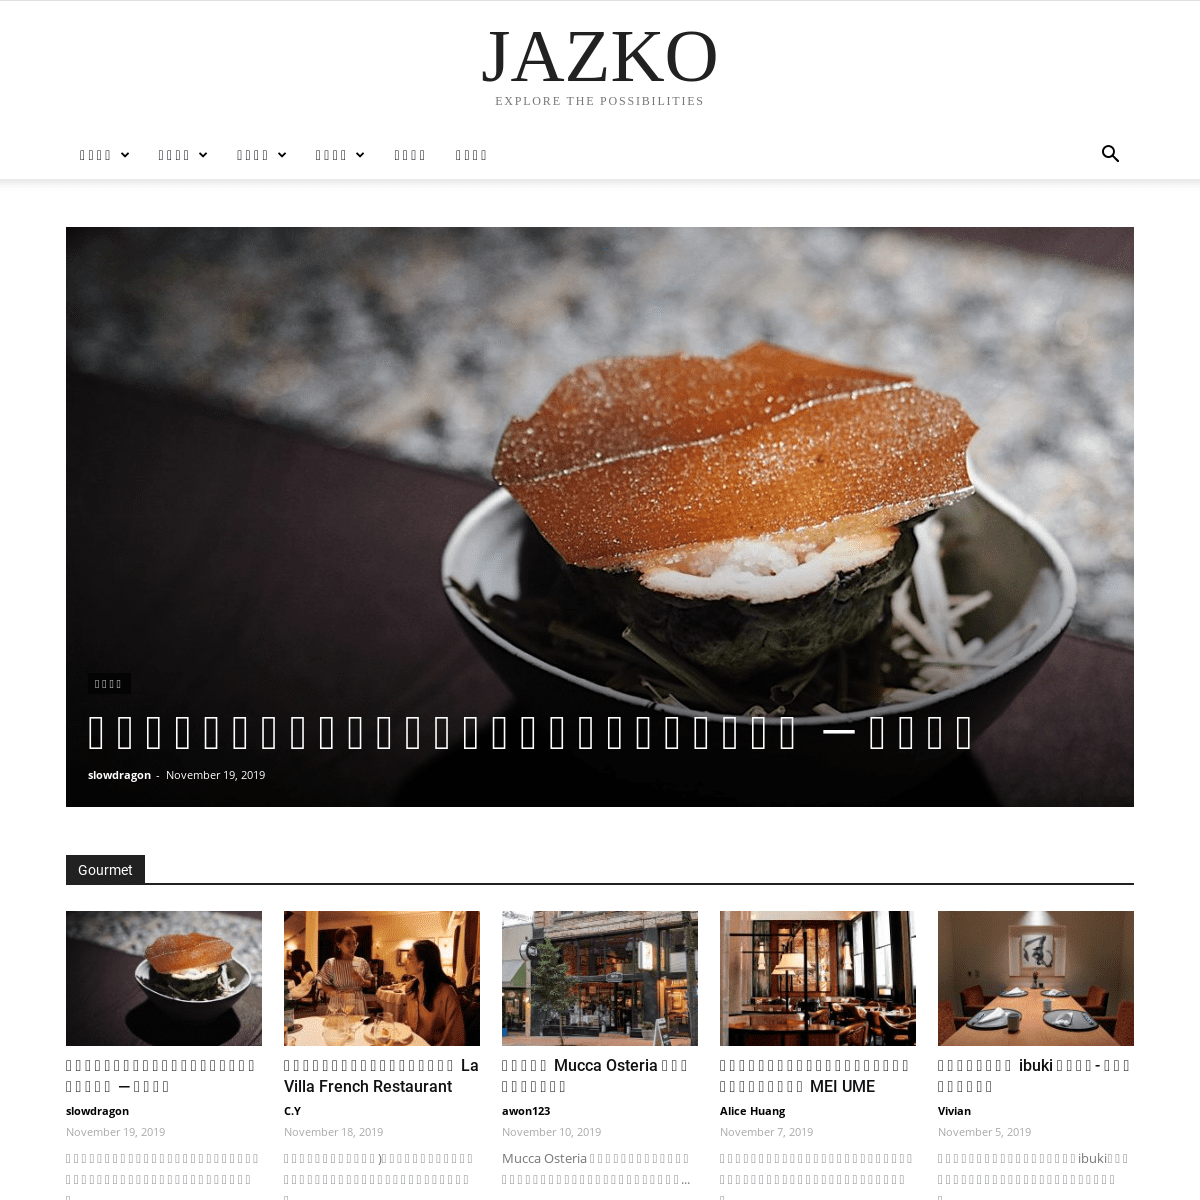 A complete backup of jazko.com